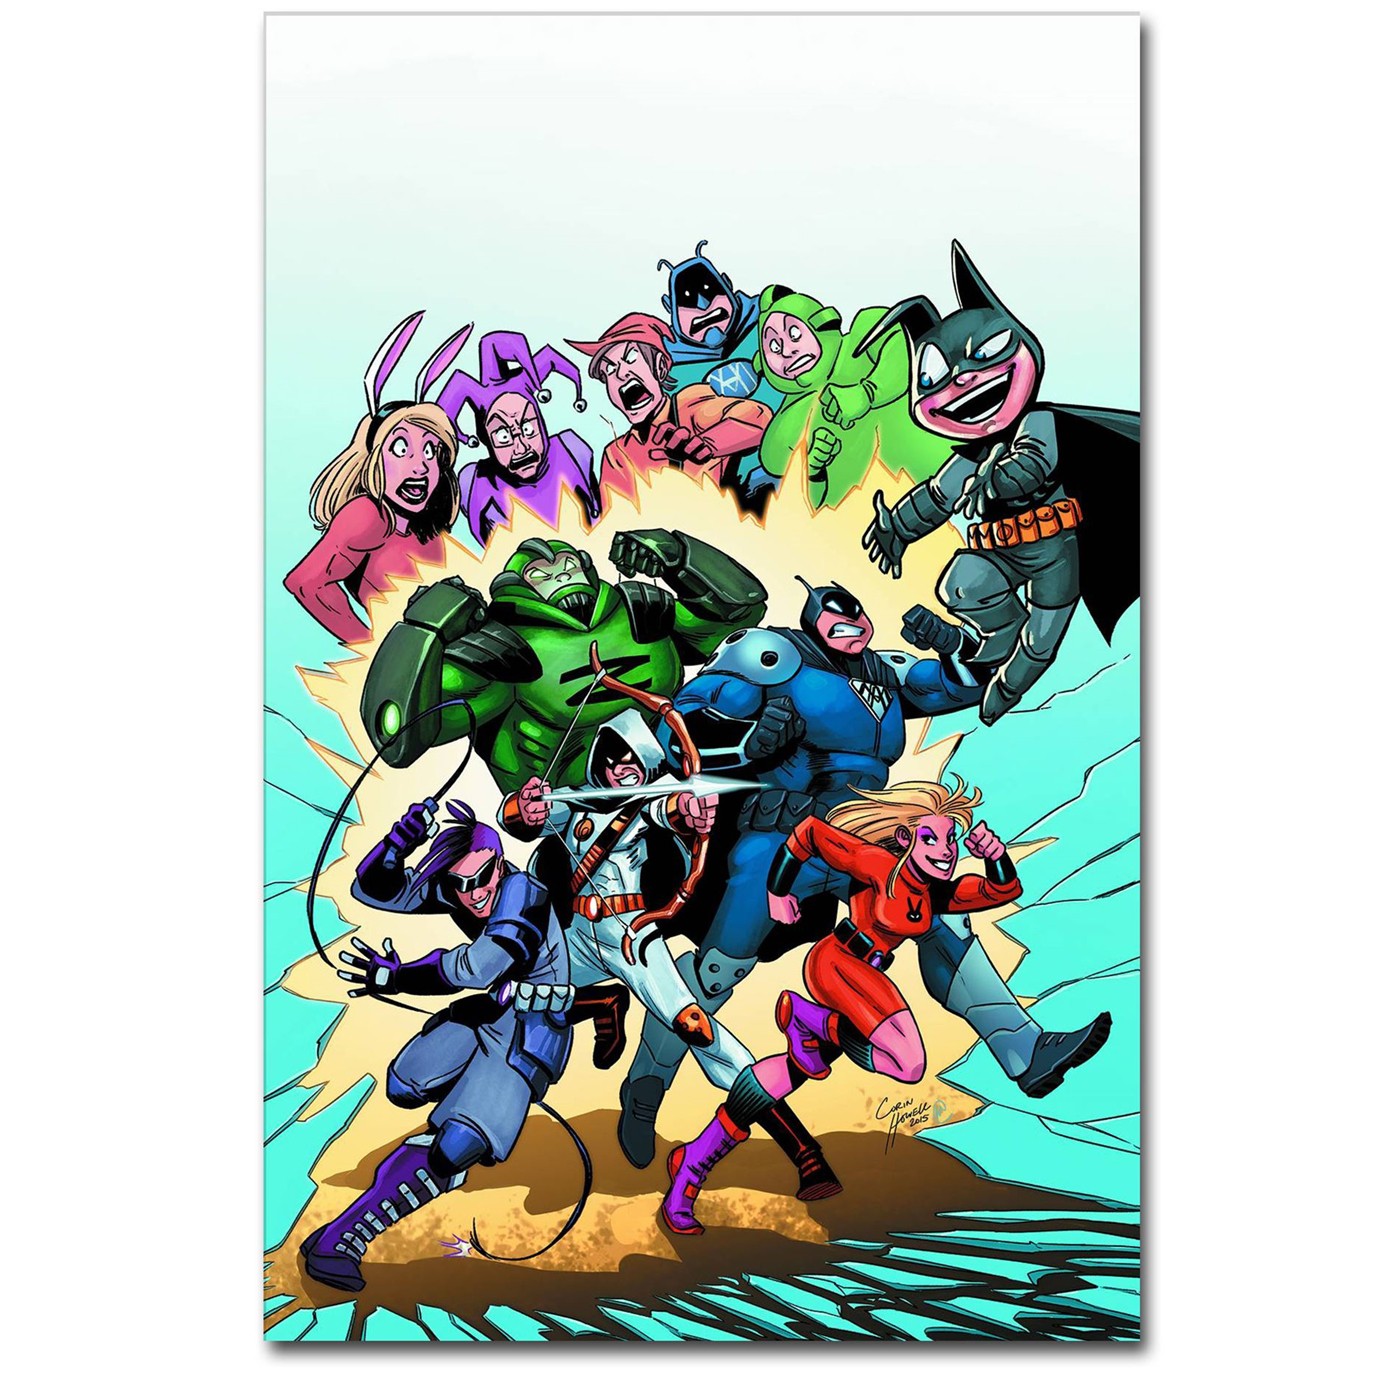 Bat Family Comic Book Binge Pack for October